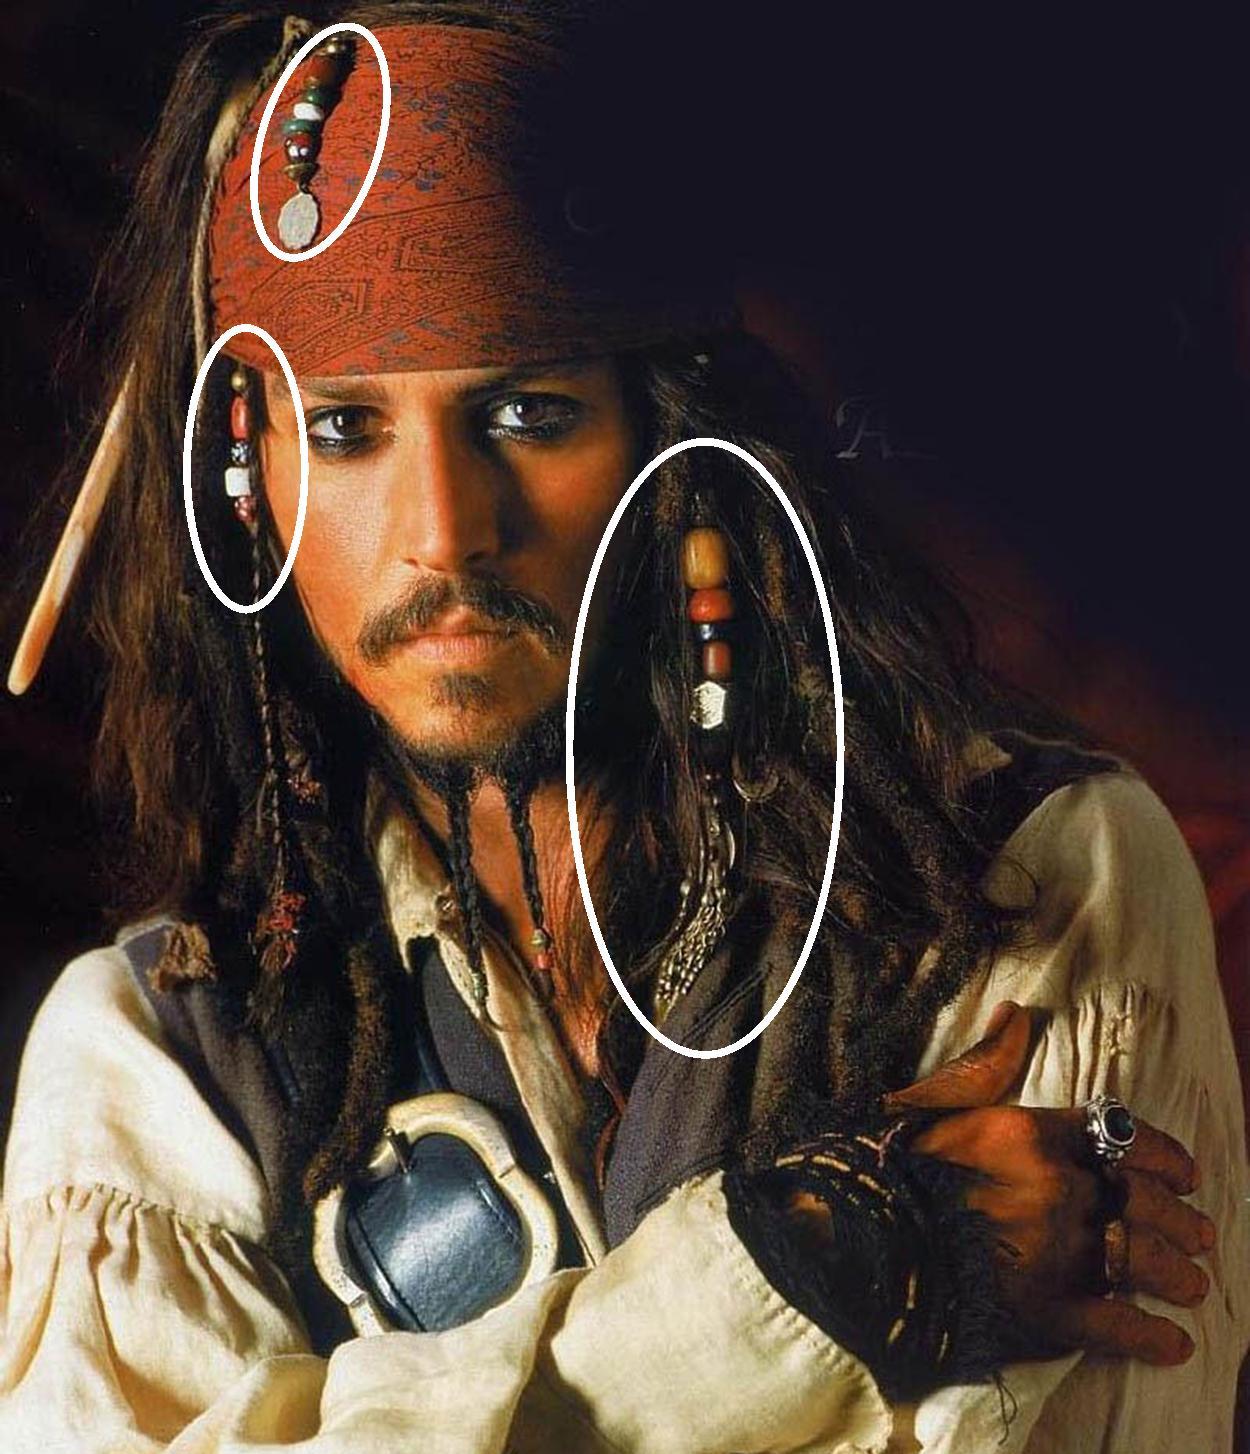 Jack Sparrow Costuming - A Pirate's Compendium